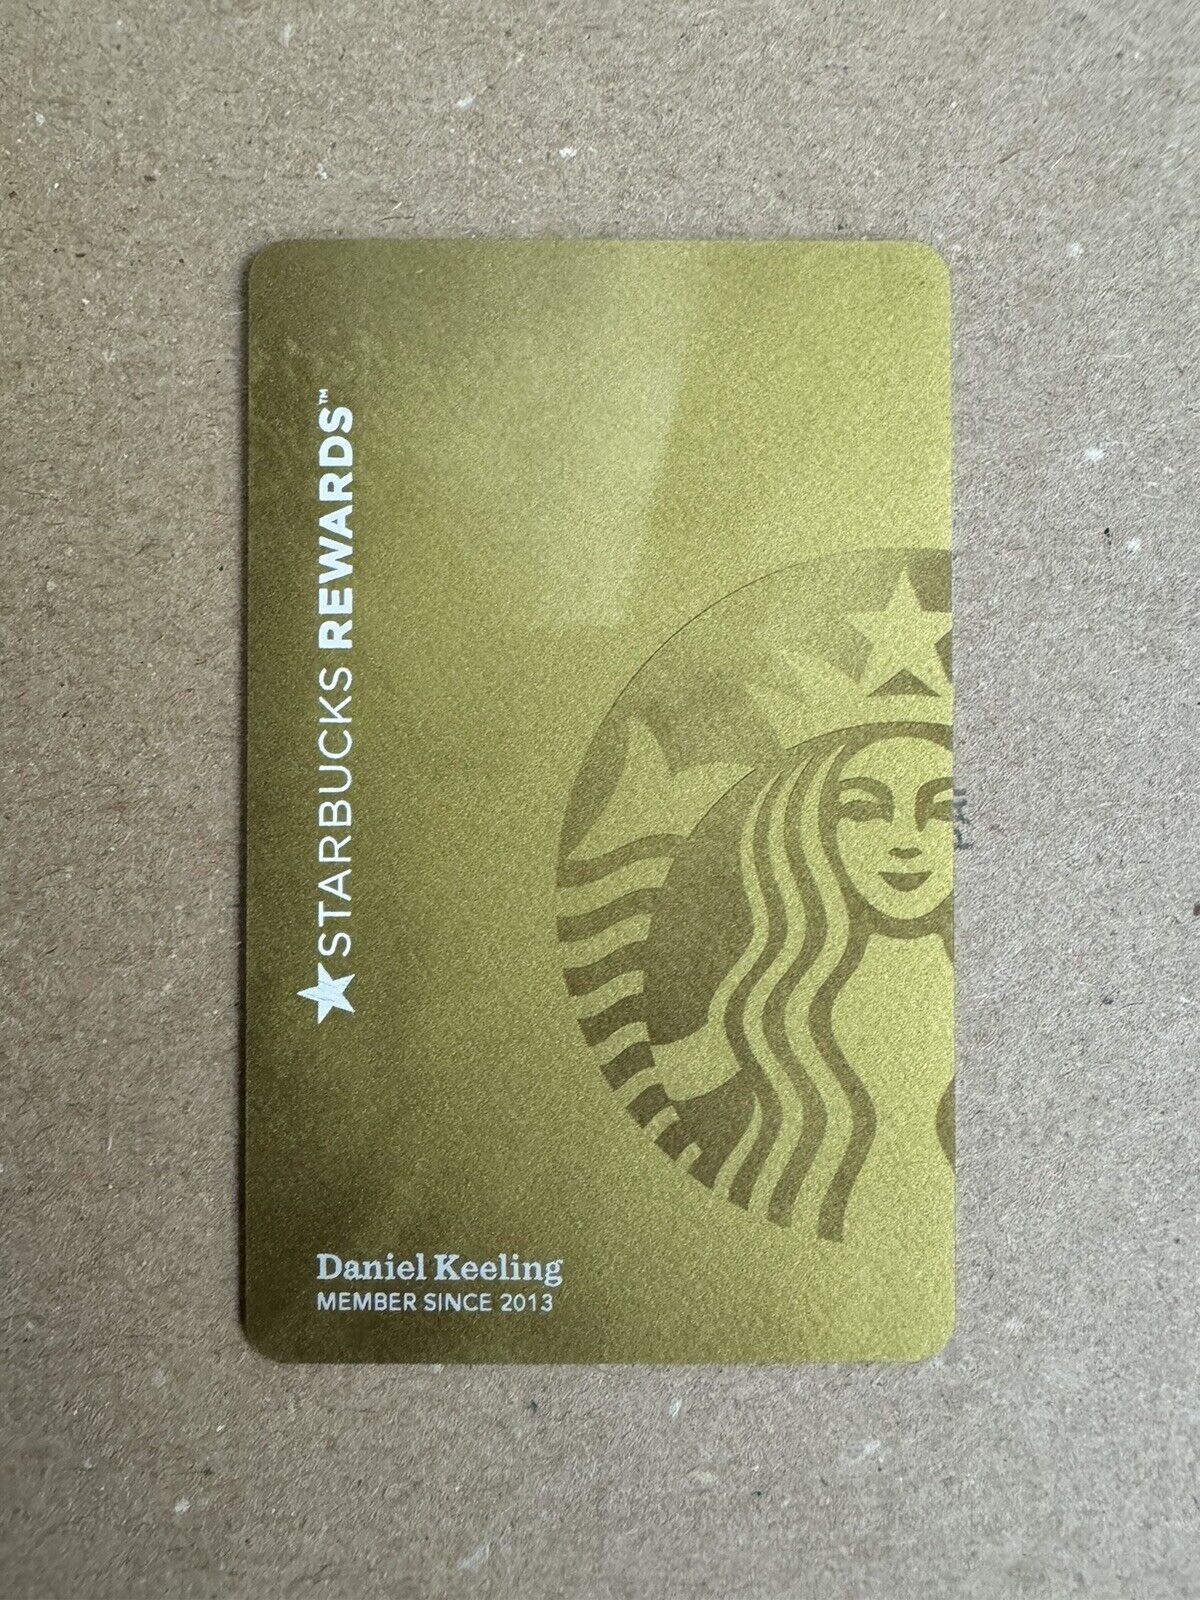 Starbucks Gold Card United States